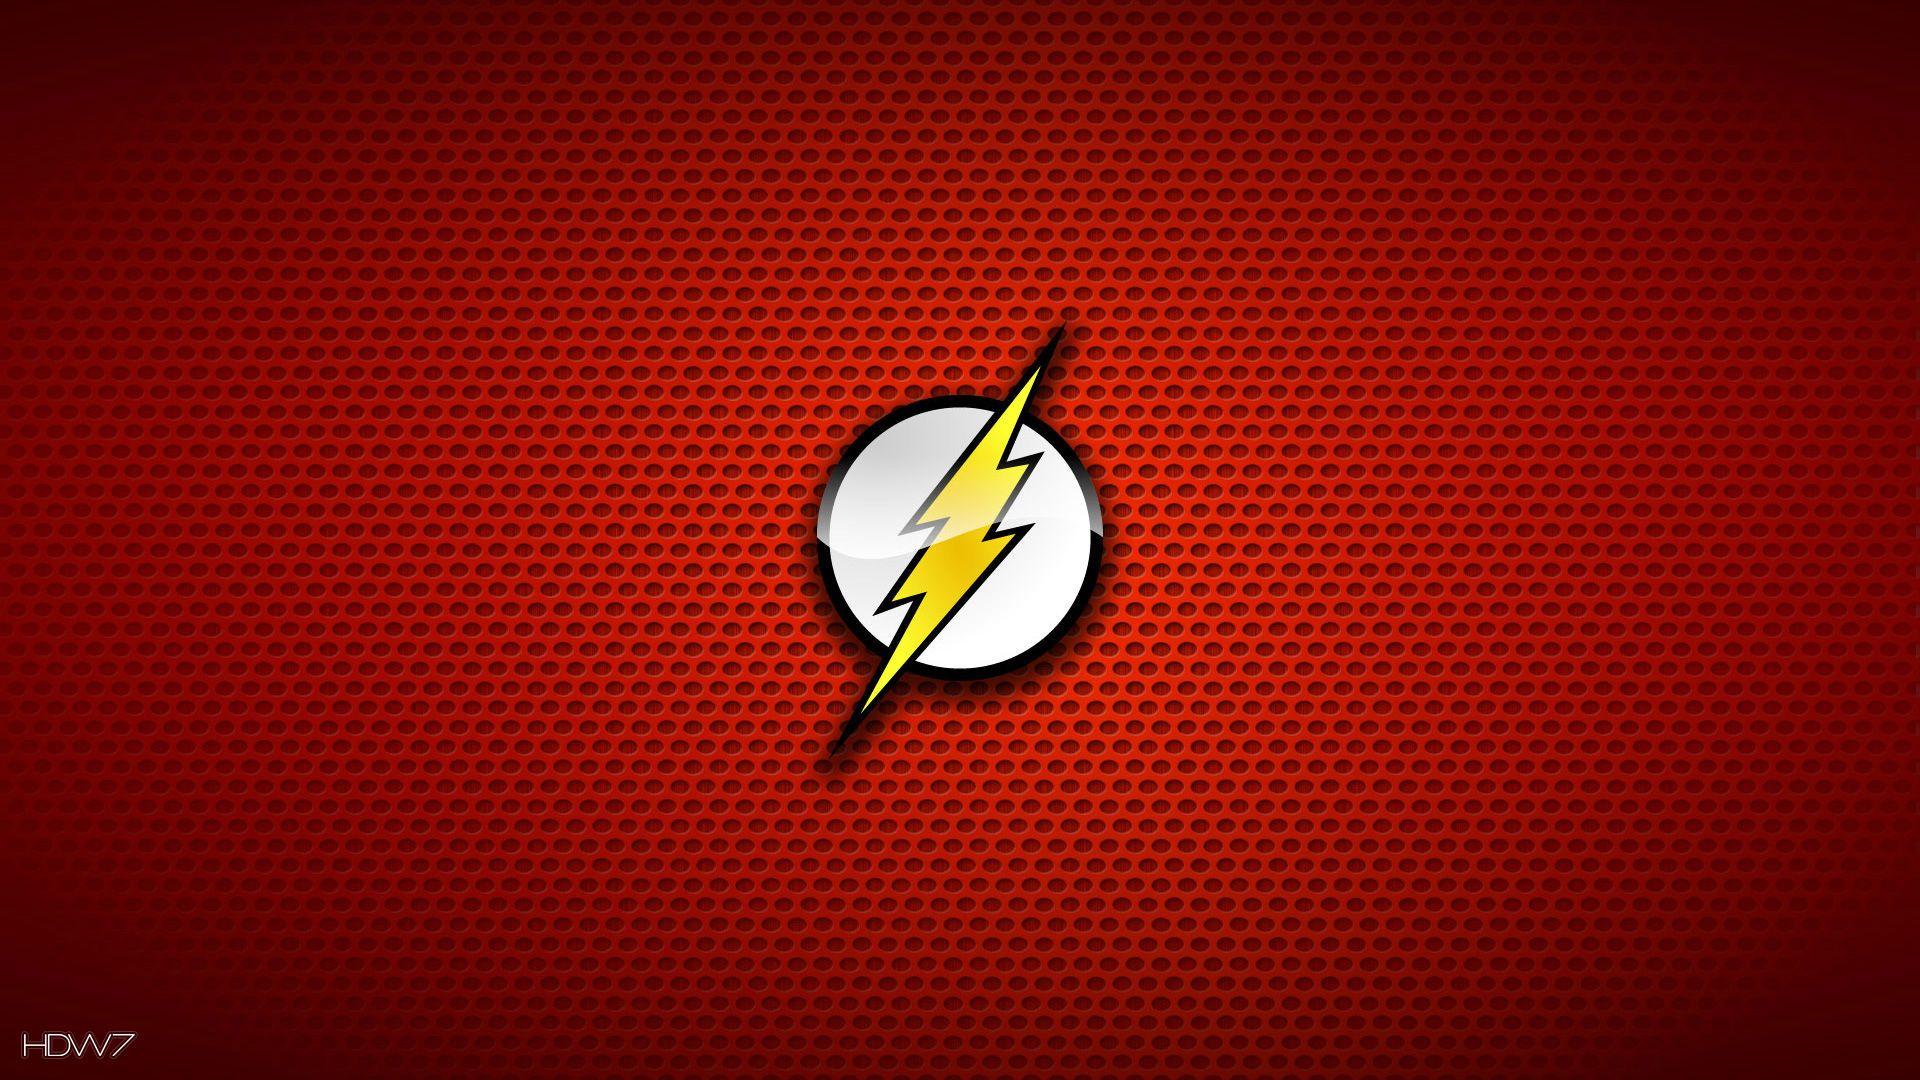 The Flash Symbol Wallpaper Group (74)